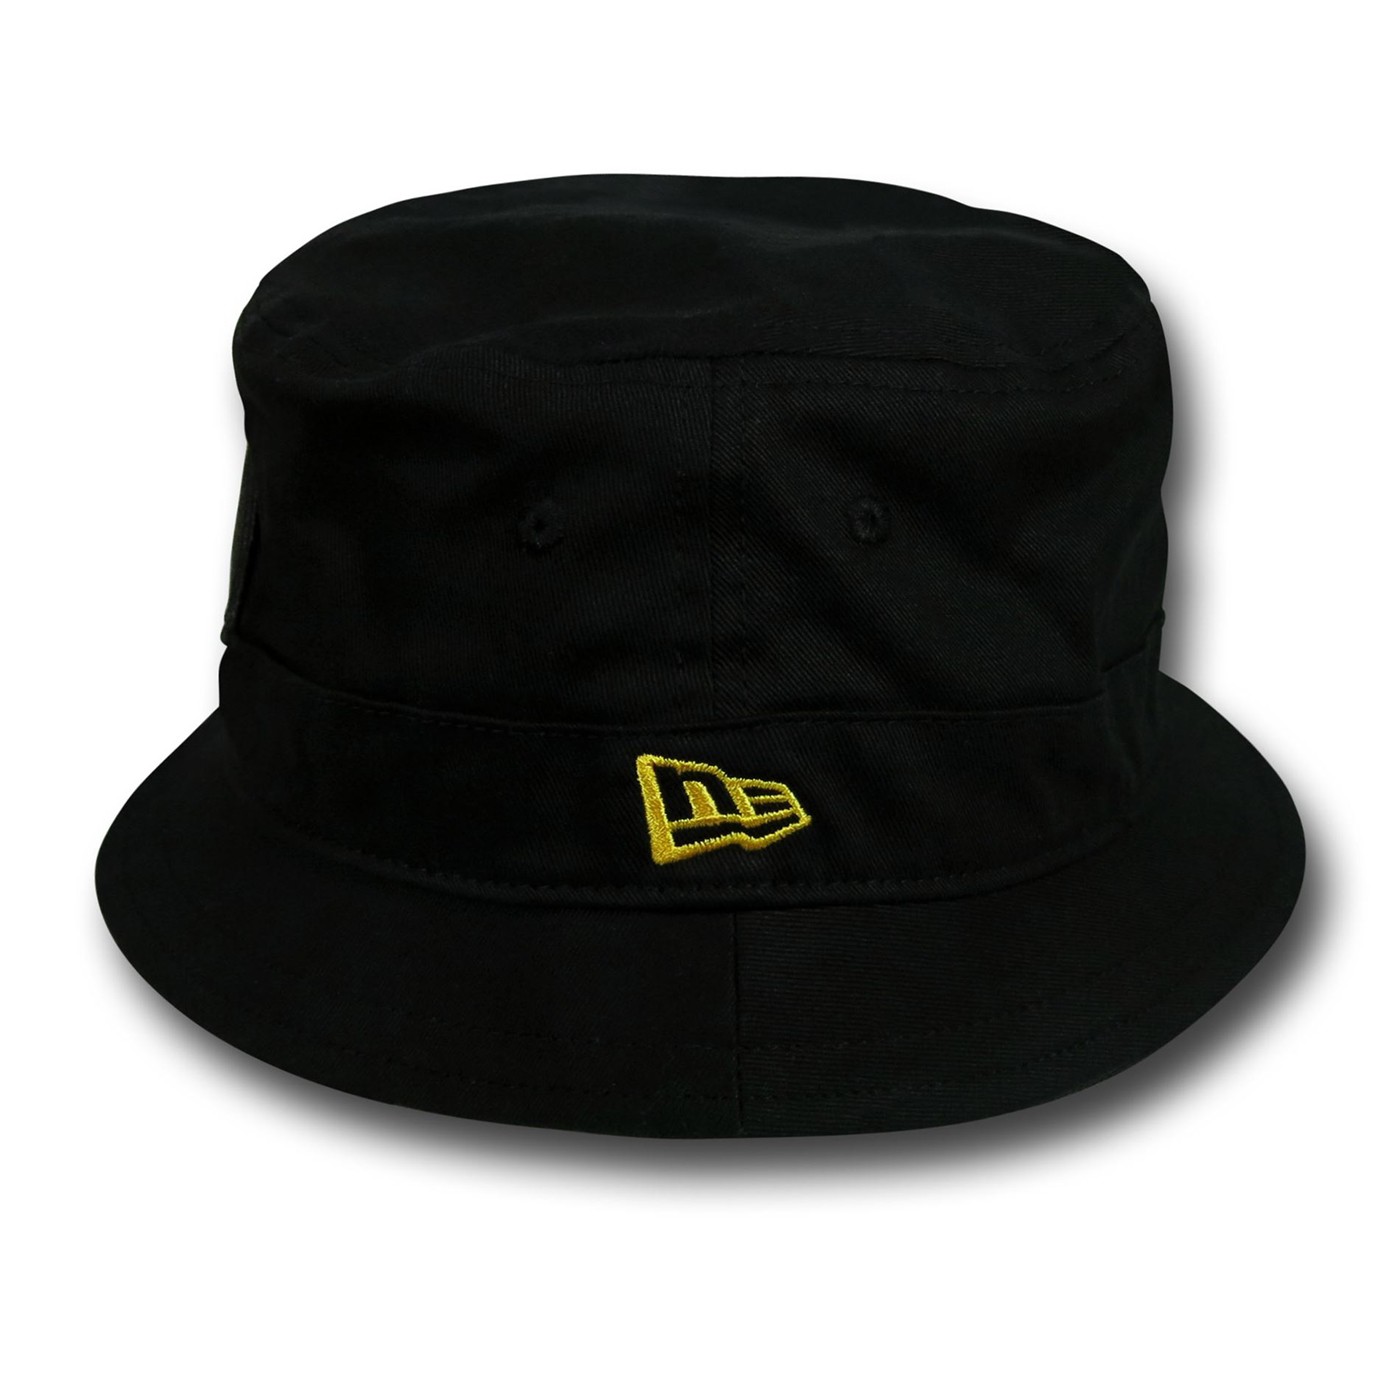 Batman Symbol Bucket Hat